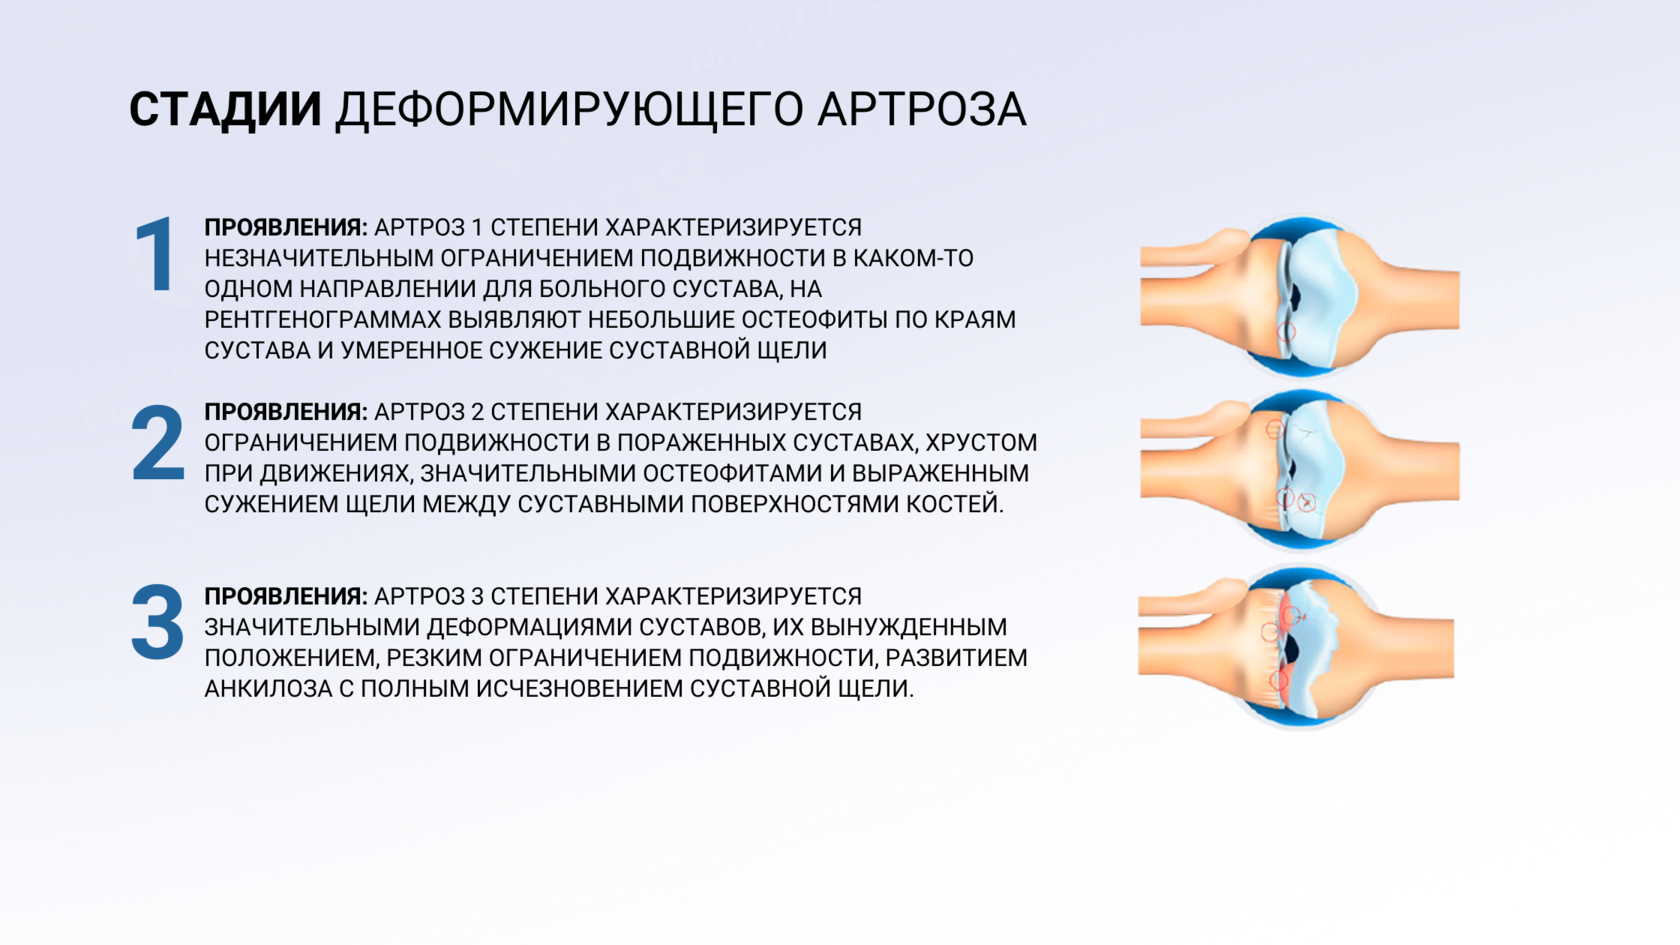 Остеоартроз 1 2 степени коленного сустава. Деформирующий артроз первого плюснефалангового сустава III стадии. Деформирующий артроз 2 стадии. Деформирующий артроз 1-2 степени. Гонартроз- деформирующий артроз коленного сустава.